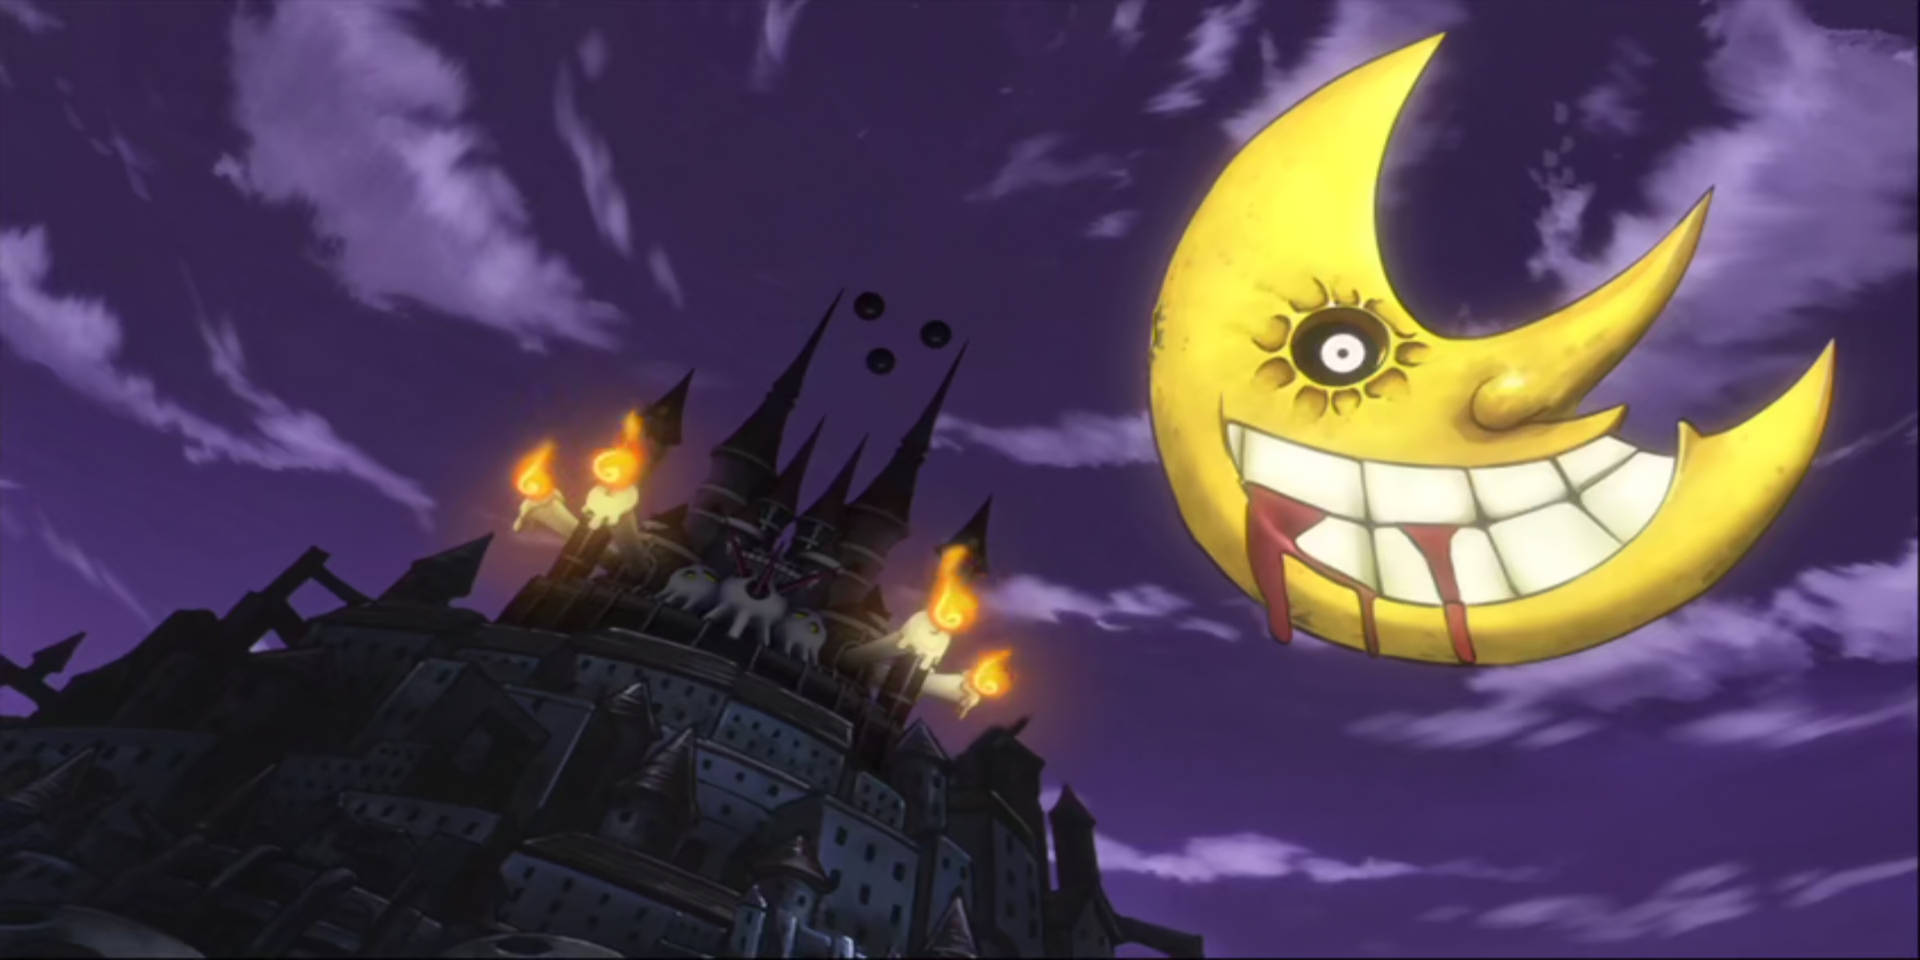 Dark Castle Under Soul Eater Moon Background